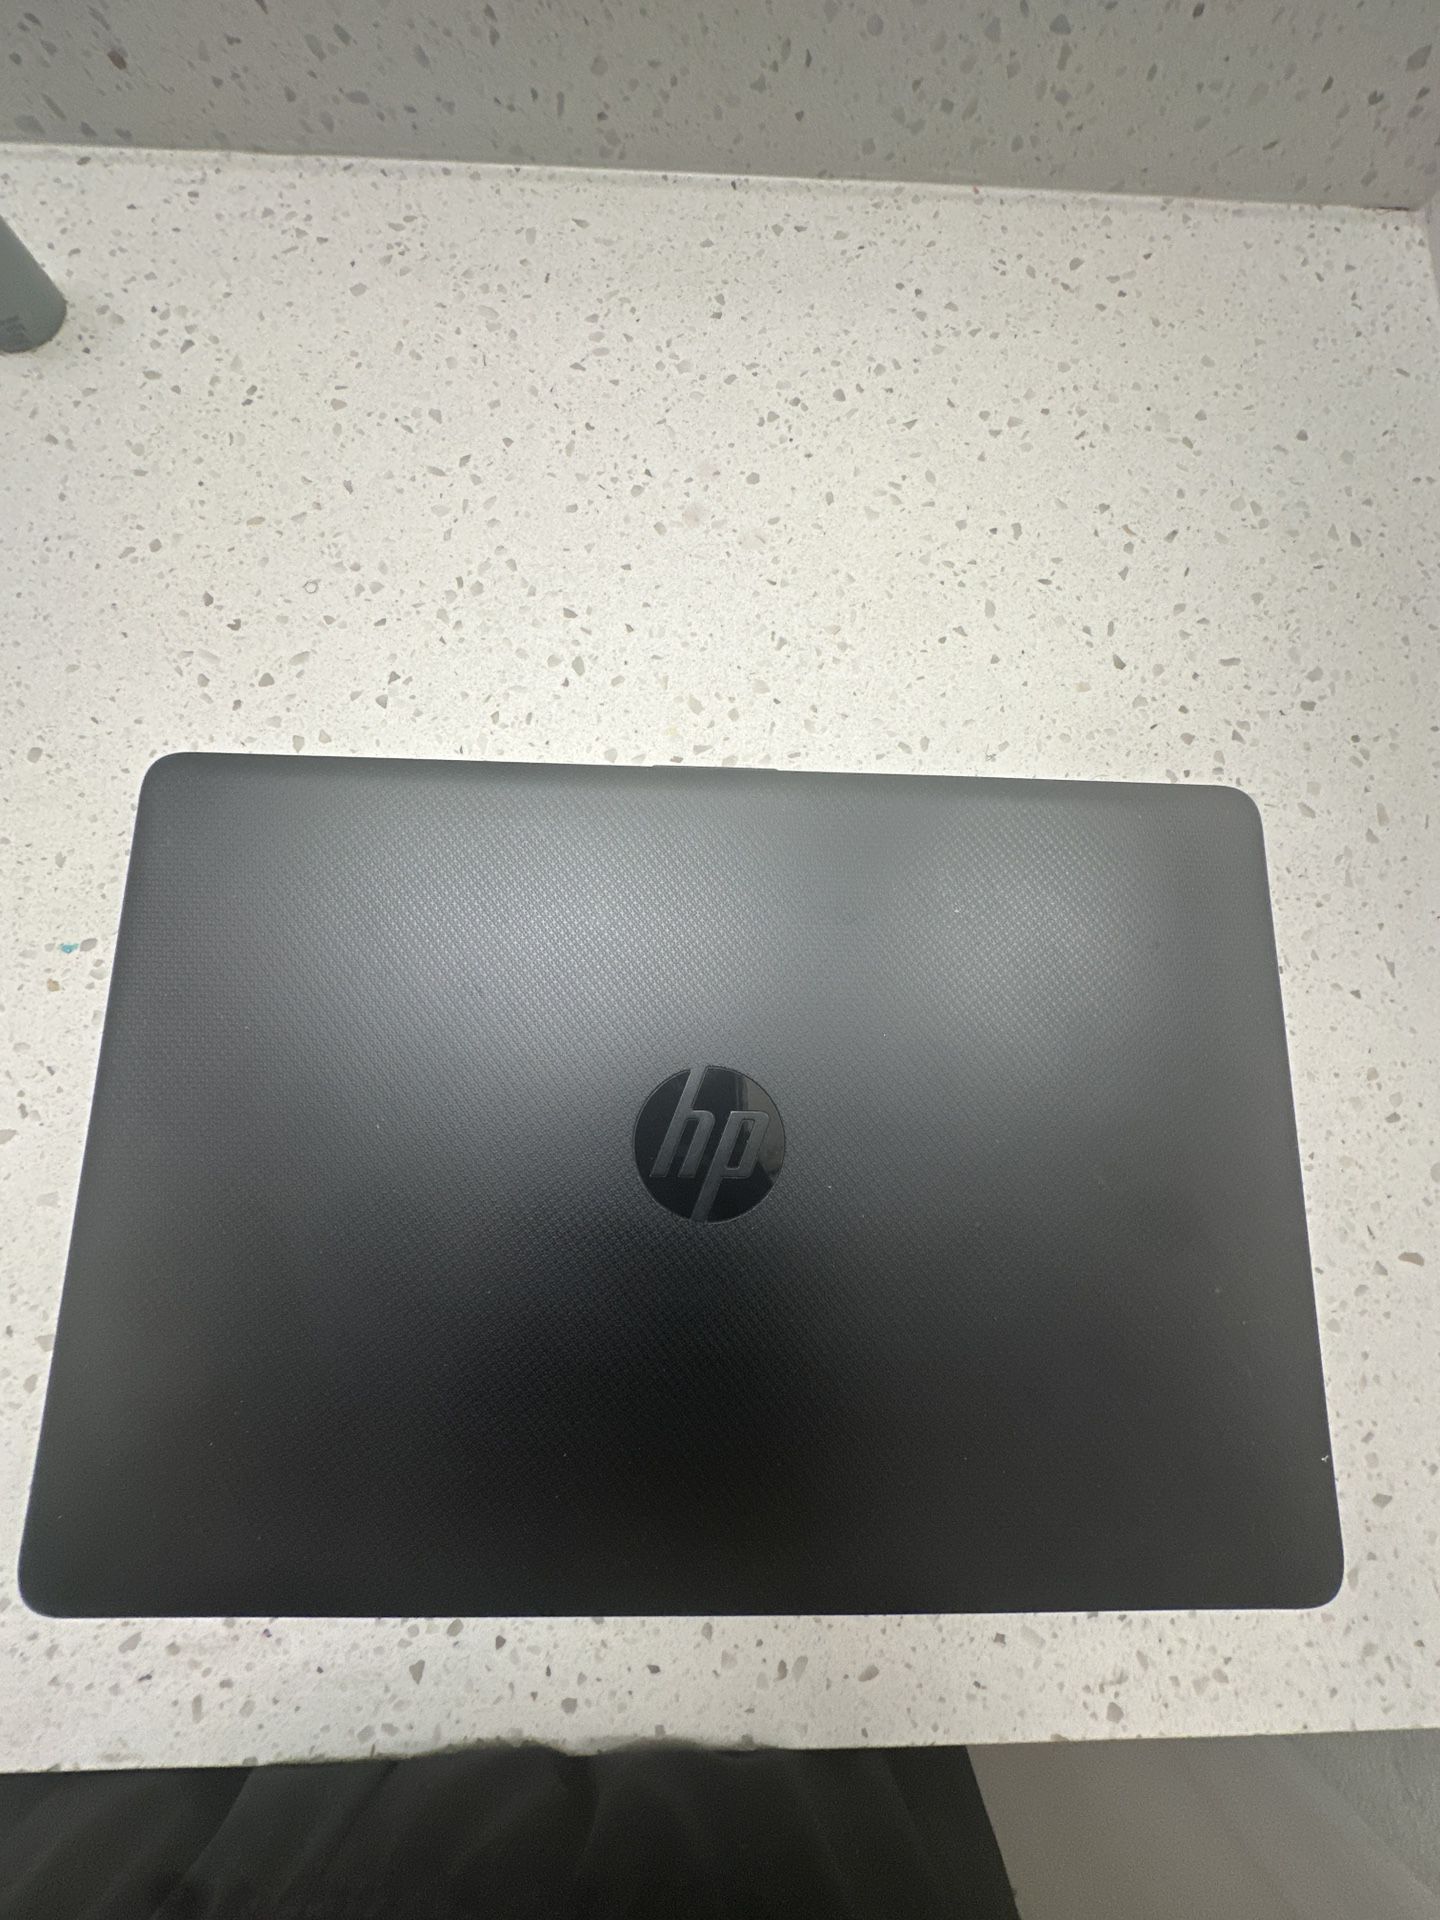 HP 15t-dw300 Home/Business Laptop (Intel i7-1165G7 4-Core, 15.6in 60Hz Full HD (1920x1080), Intel Iris Xe, 16GB RAM, 256GB PCIe SSD, Wifi, HDMI, Webca